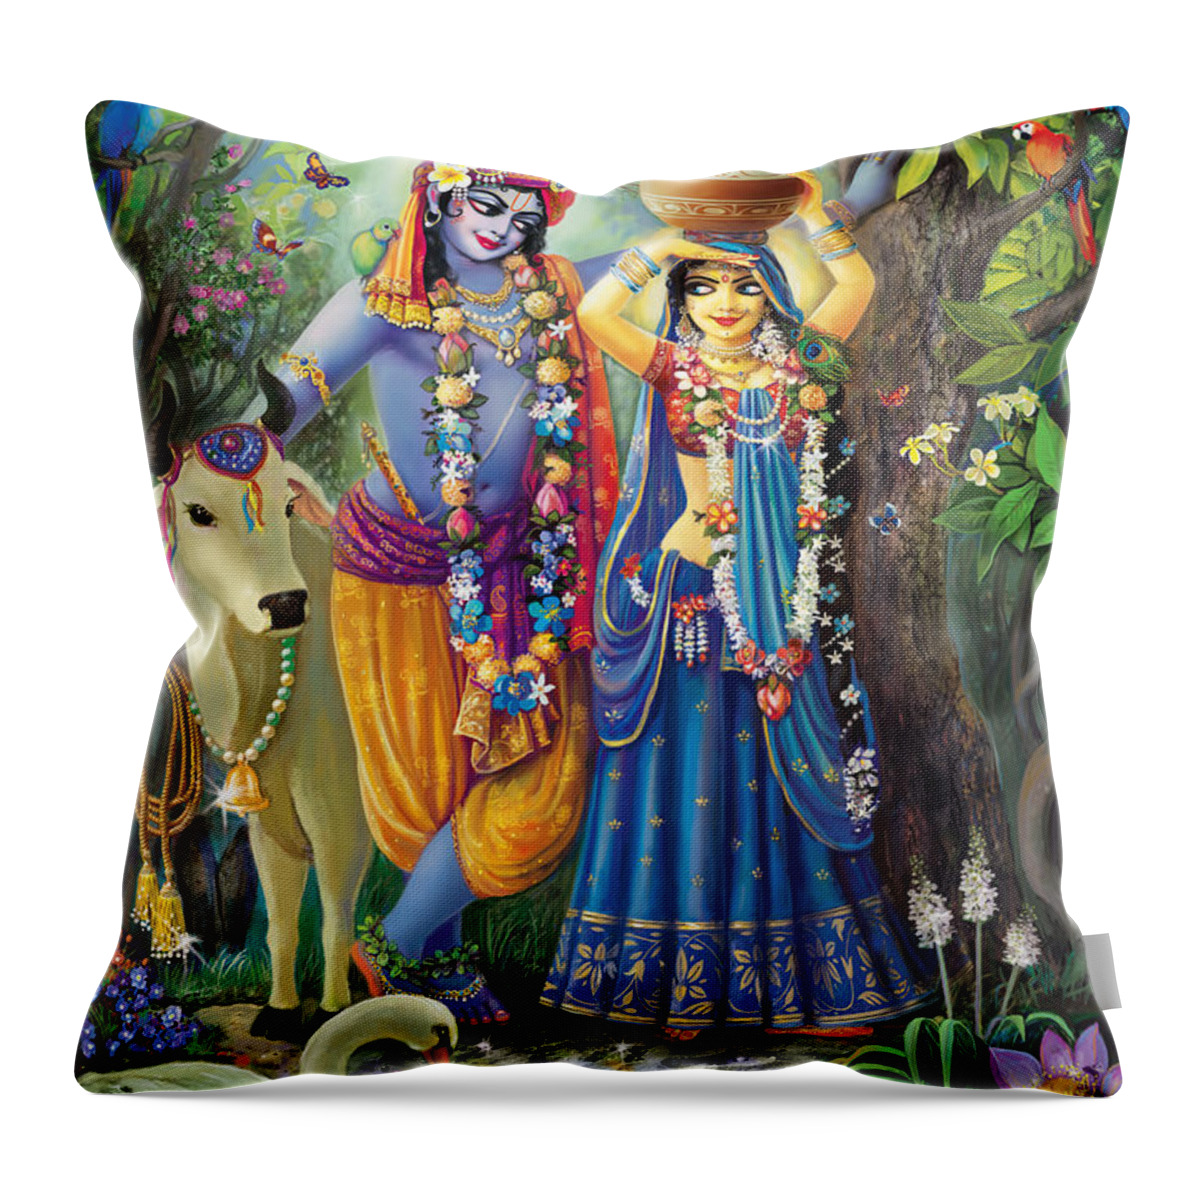 Radha-krishna Throw Pillow featuring the painting Radha-Krishna Radhakunda by Lila Shravani